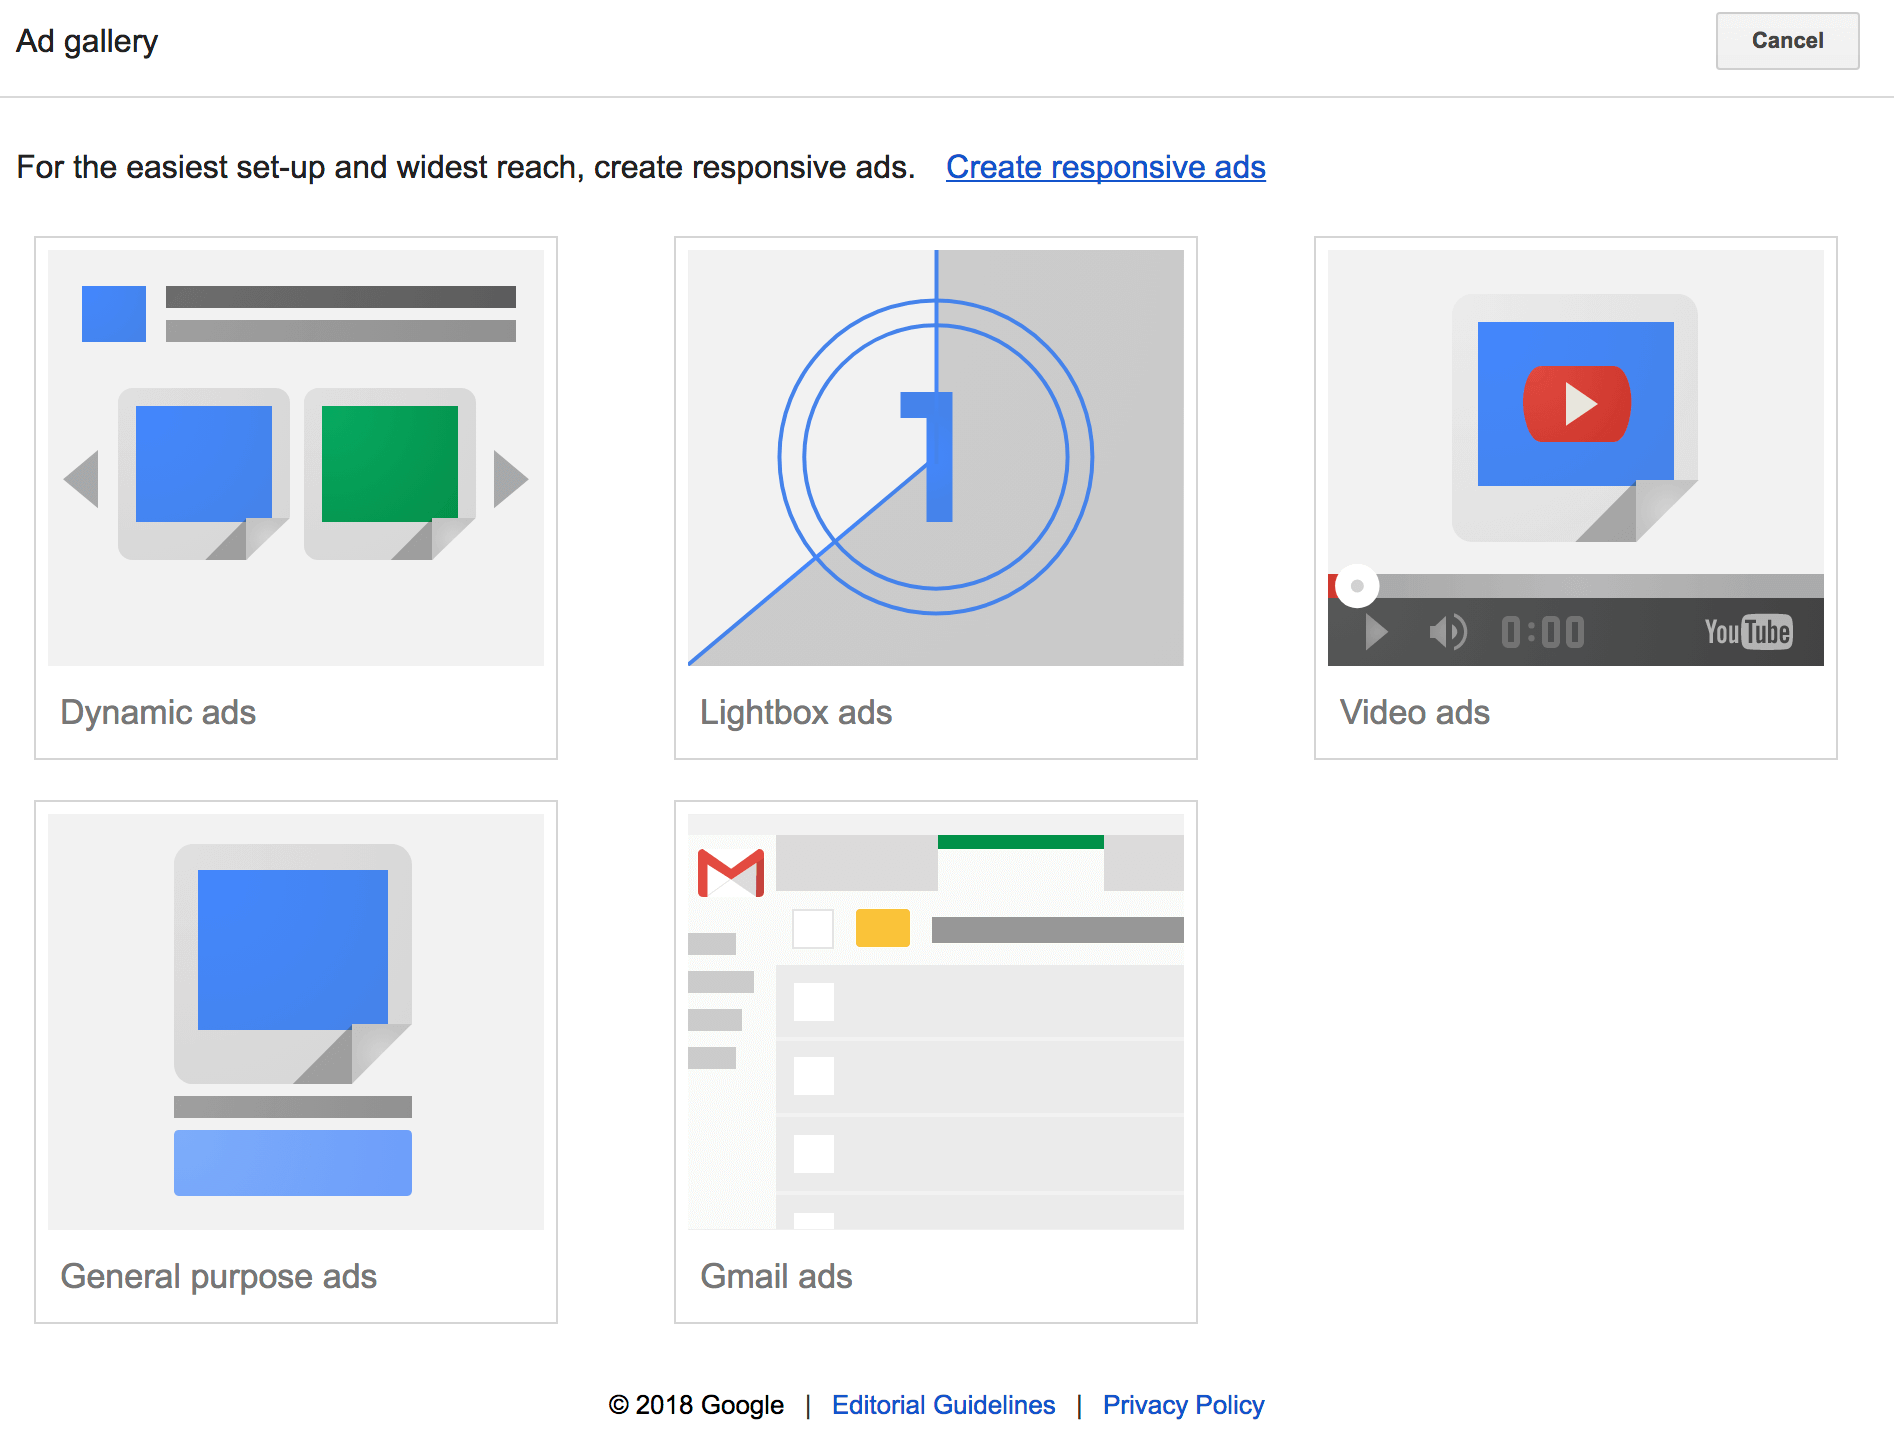 Google Ad Gallery